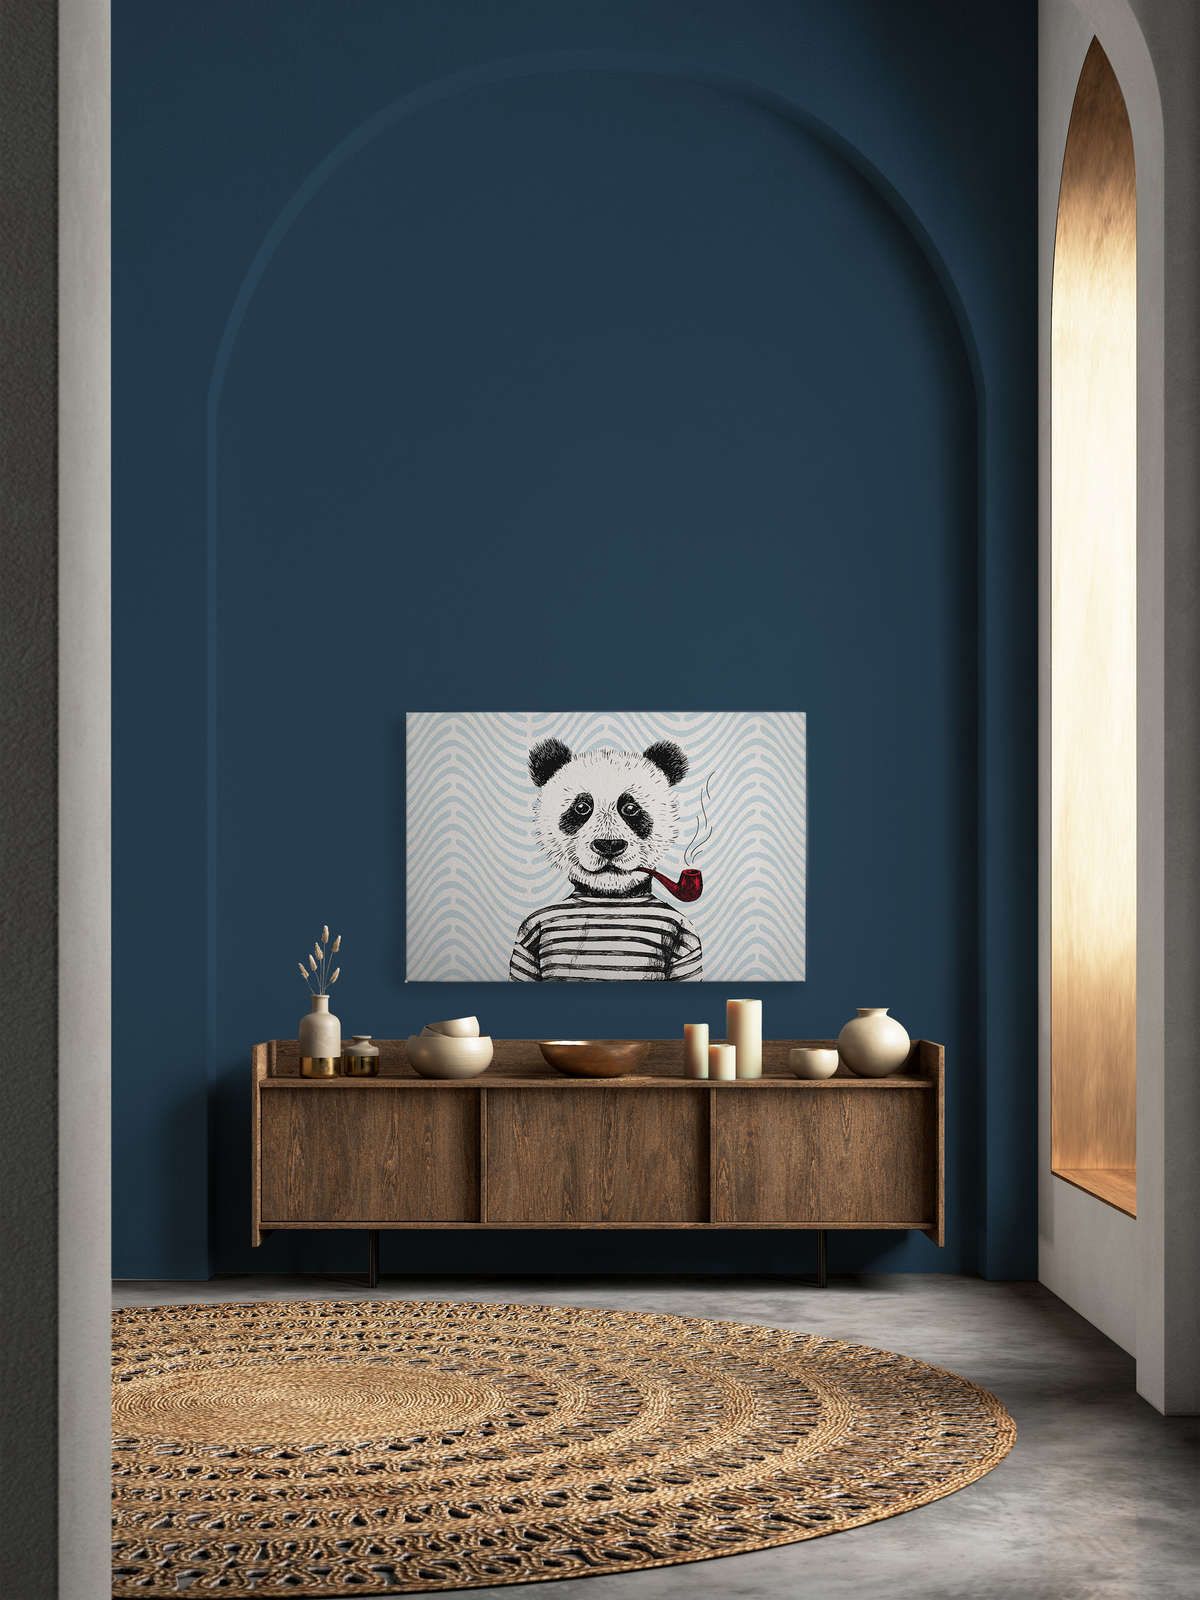             Leinwandbild Comic-Design für Kinderzimmer Panda-Motiv – 1,20 m x 0,80 m
        